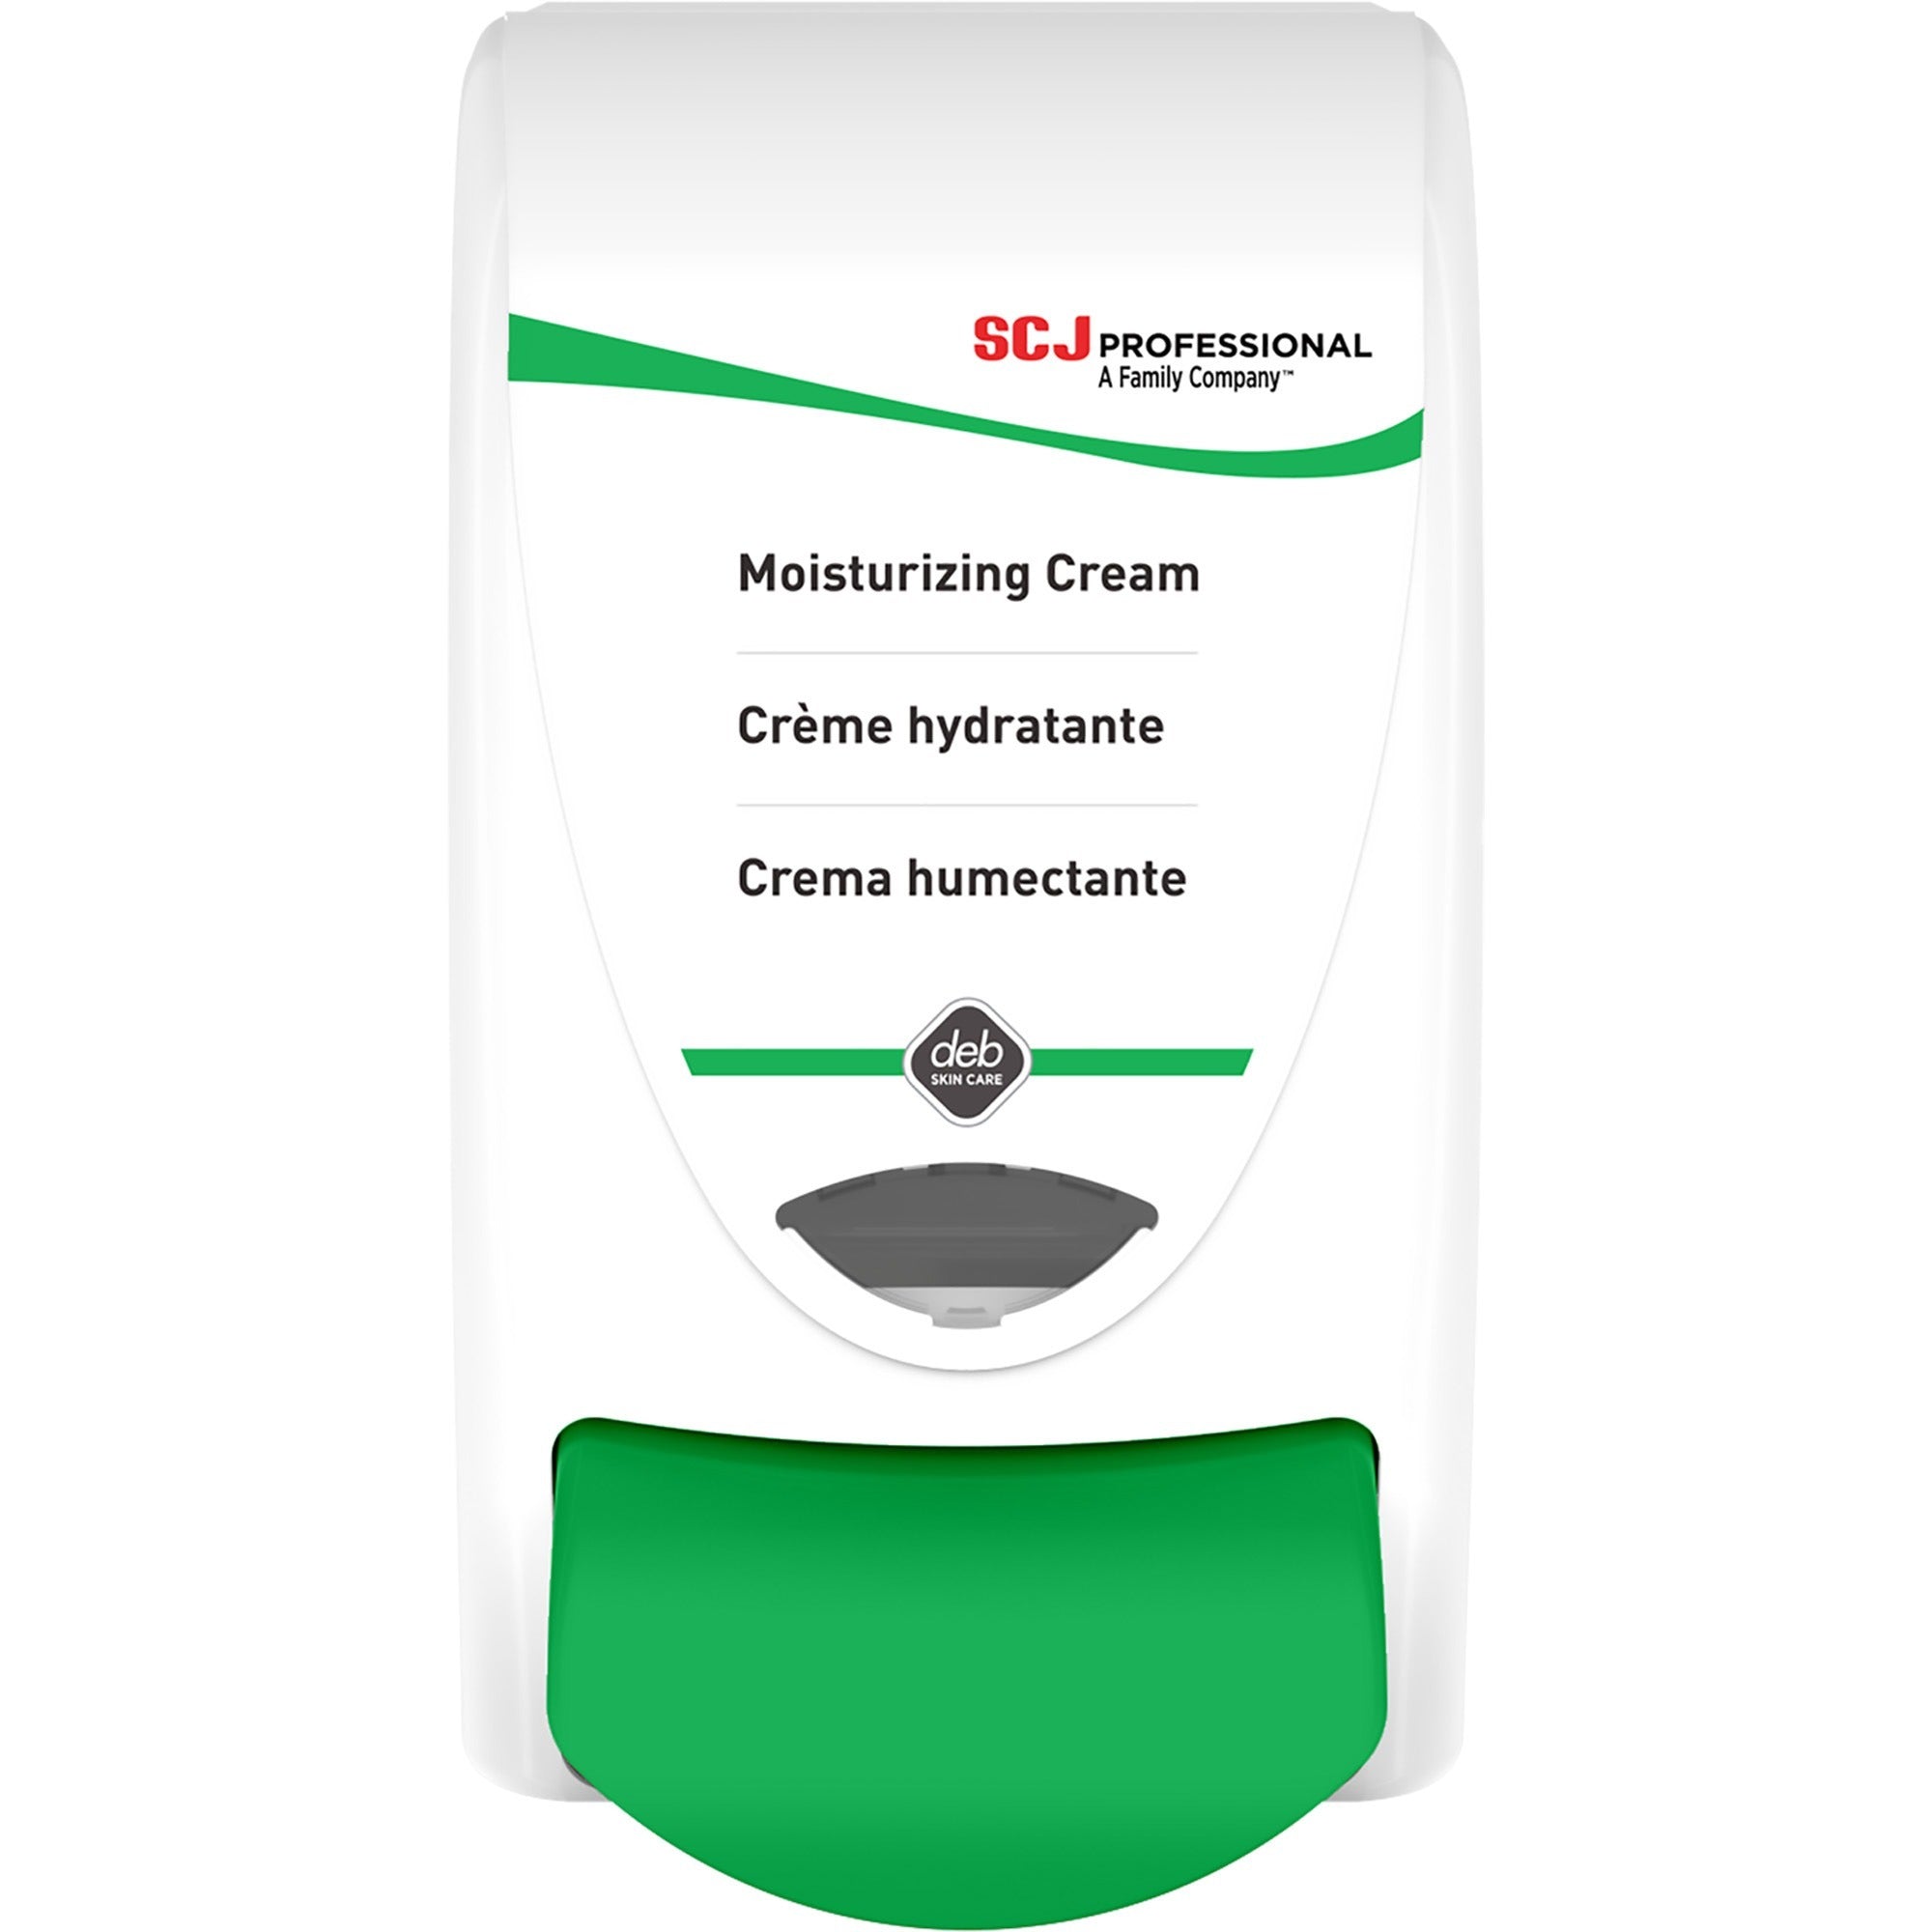 sc-johnson-moisturizing-cream-dispenser-1-each-green-plastic-glass_sjnres1lds - 1